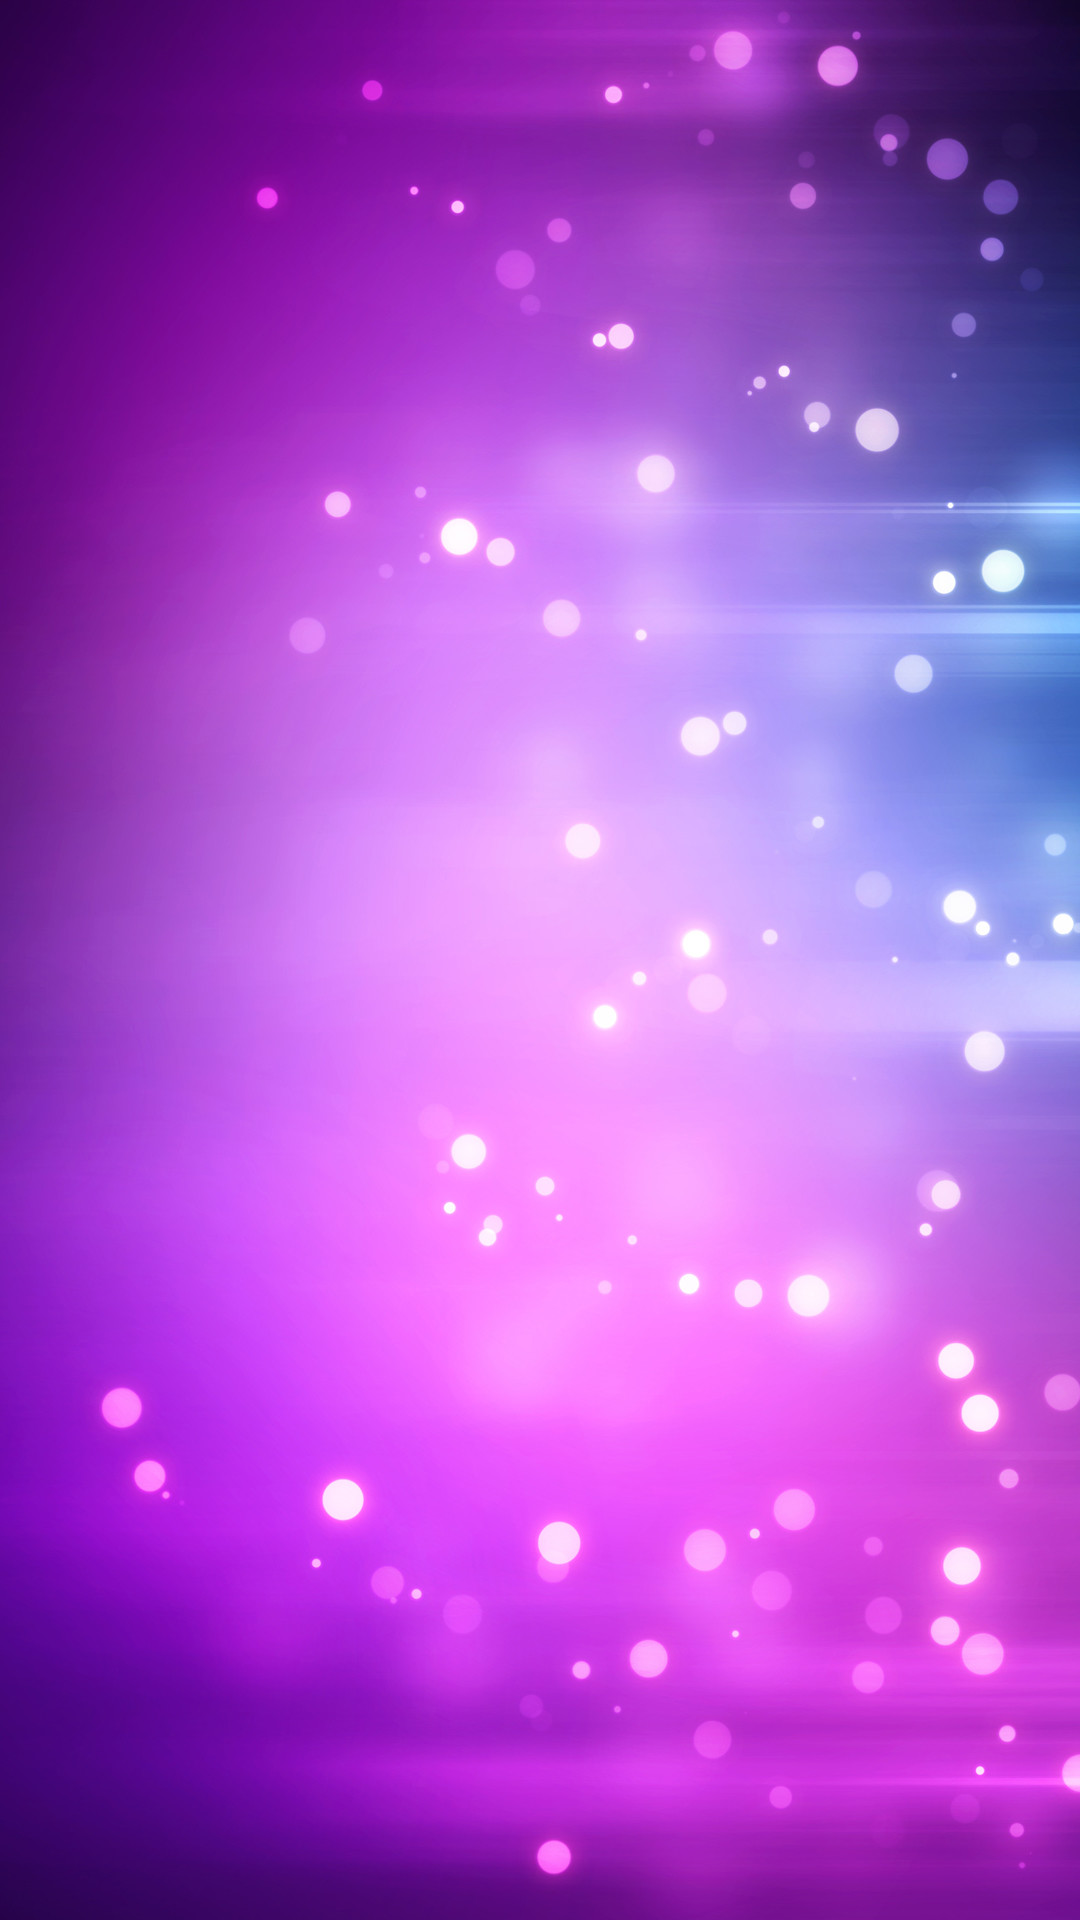 beautiful wallpaper for mobile phone,violet,purple,blue,pink,light